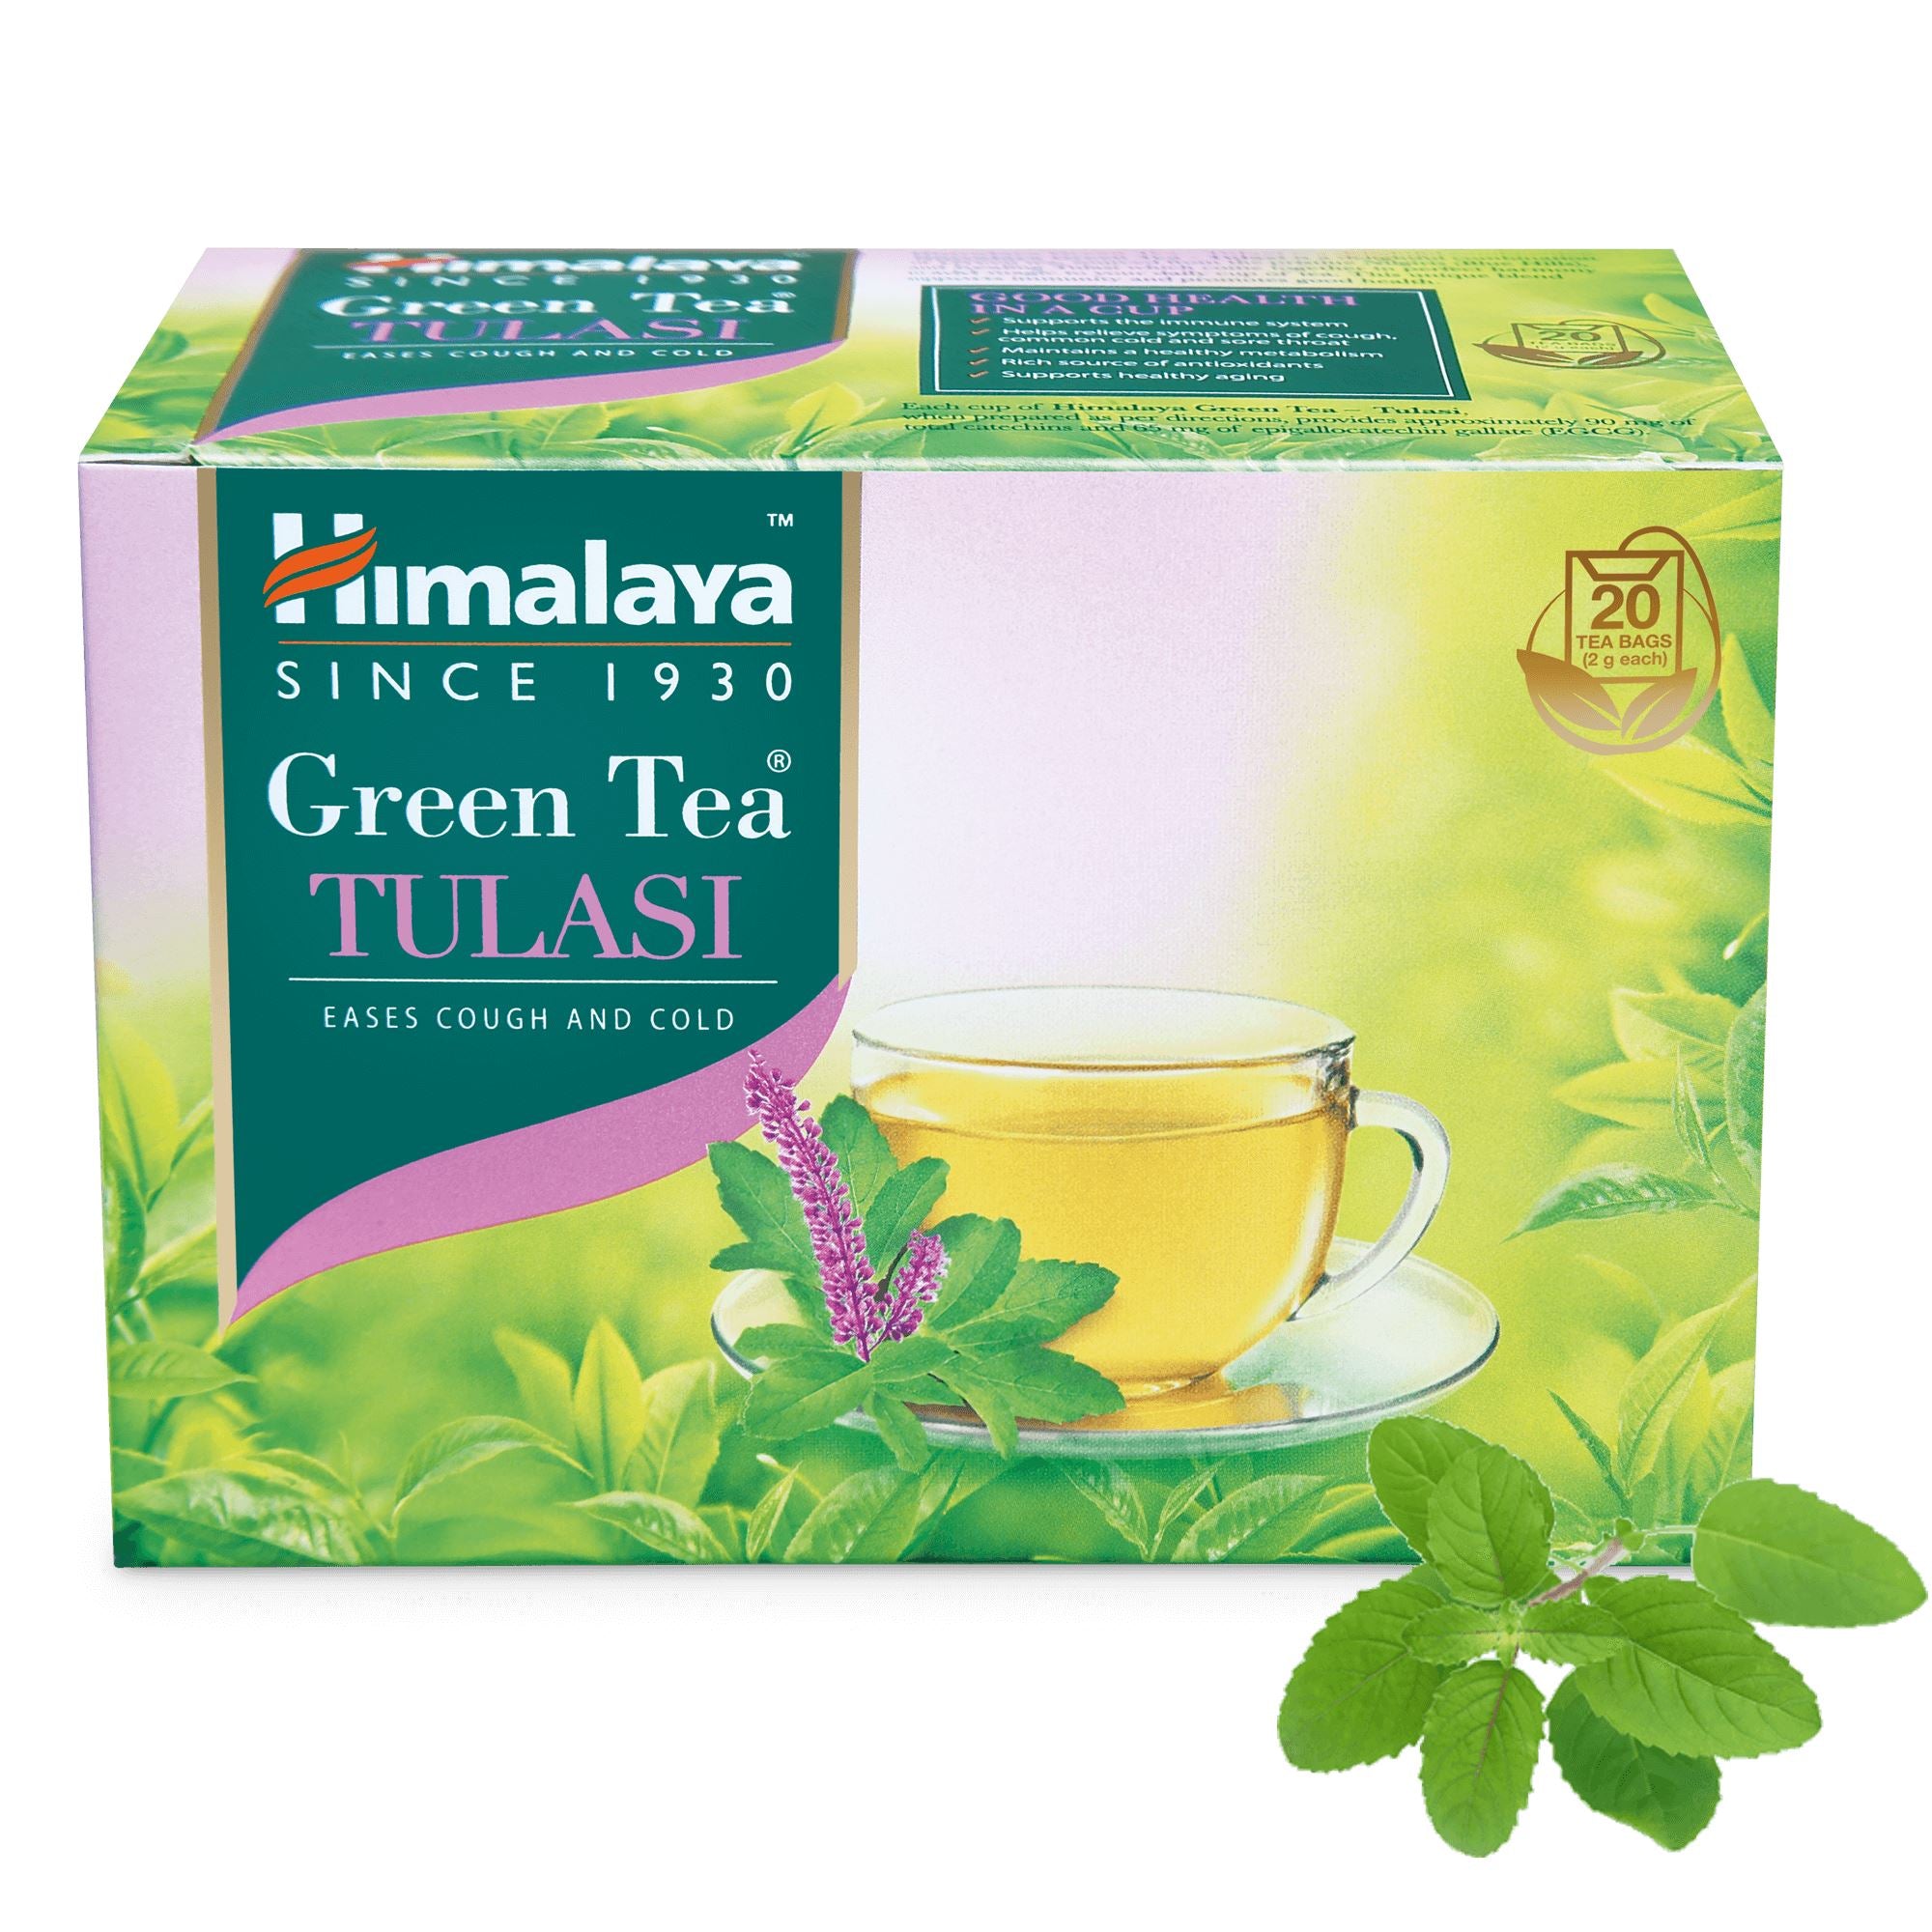 Himalaya Green Tea TULASI - Supports immunity and promotes good health